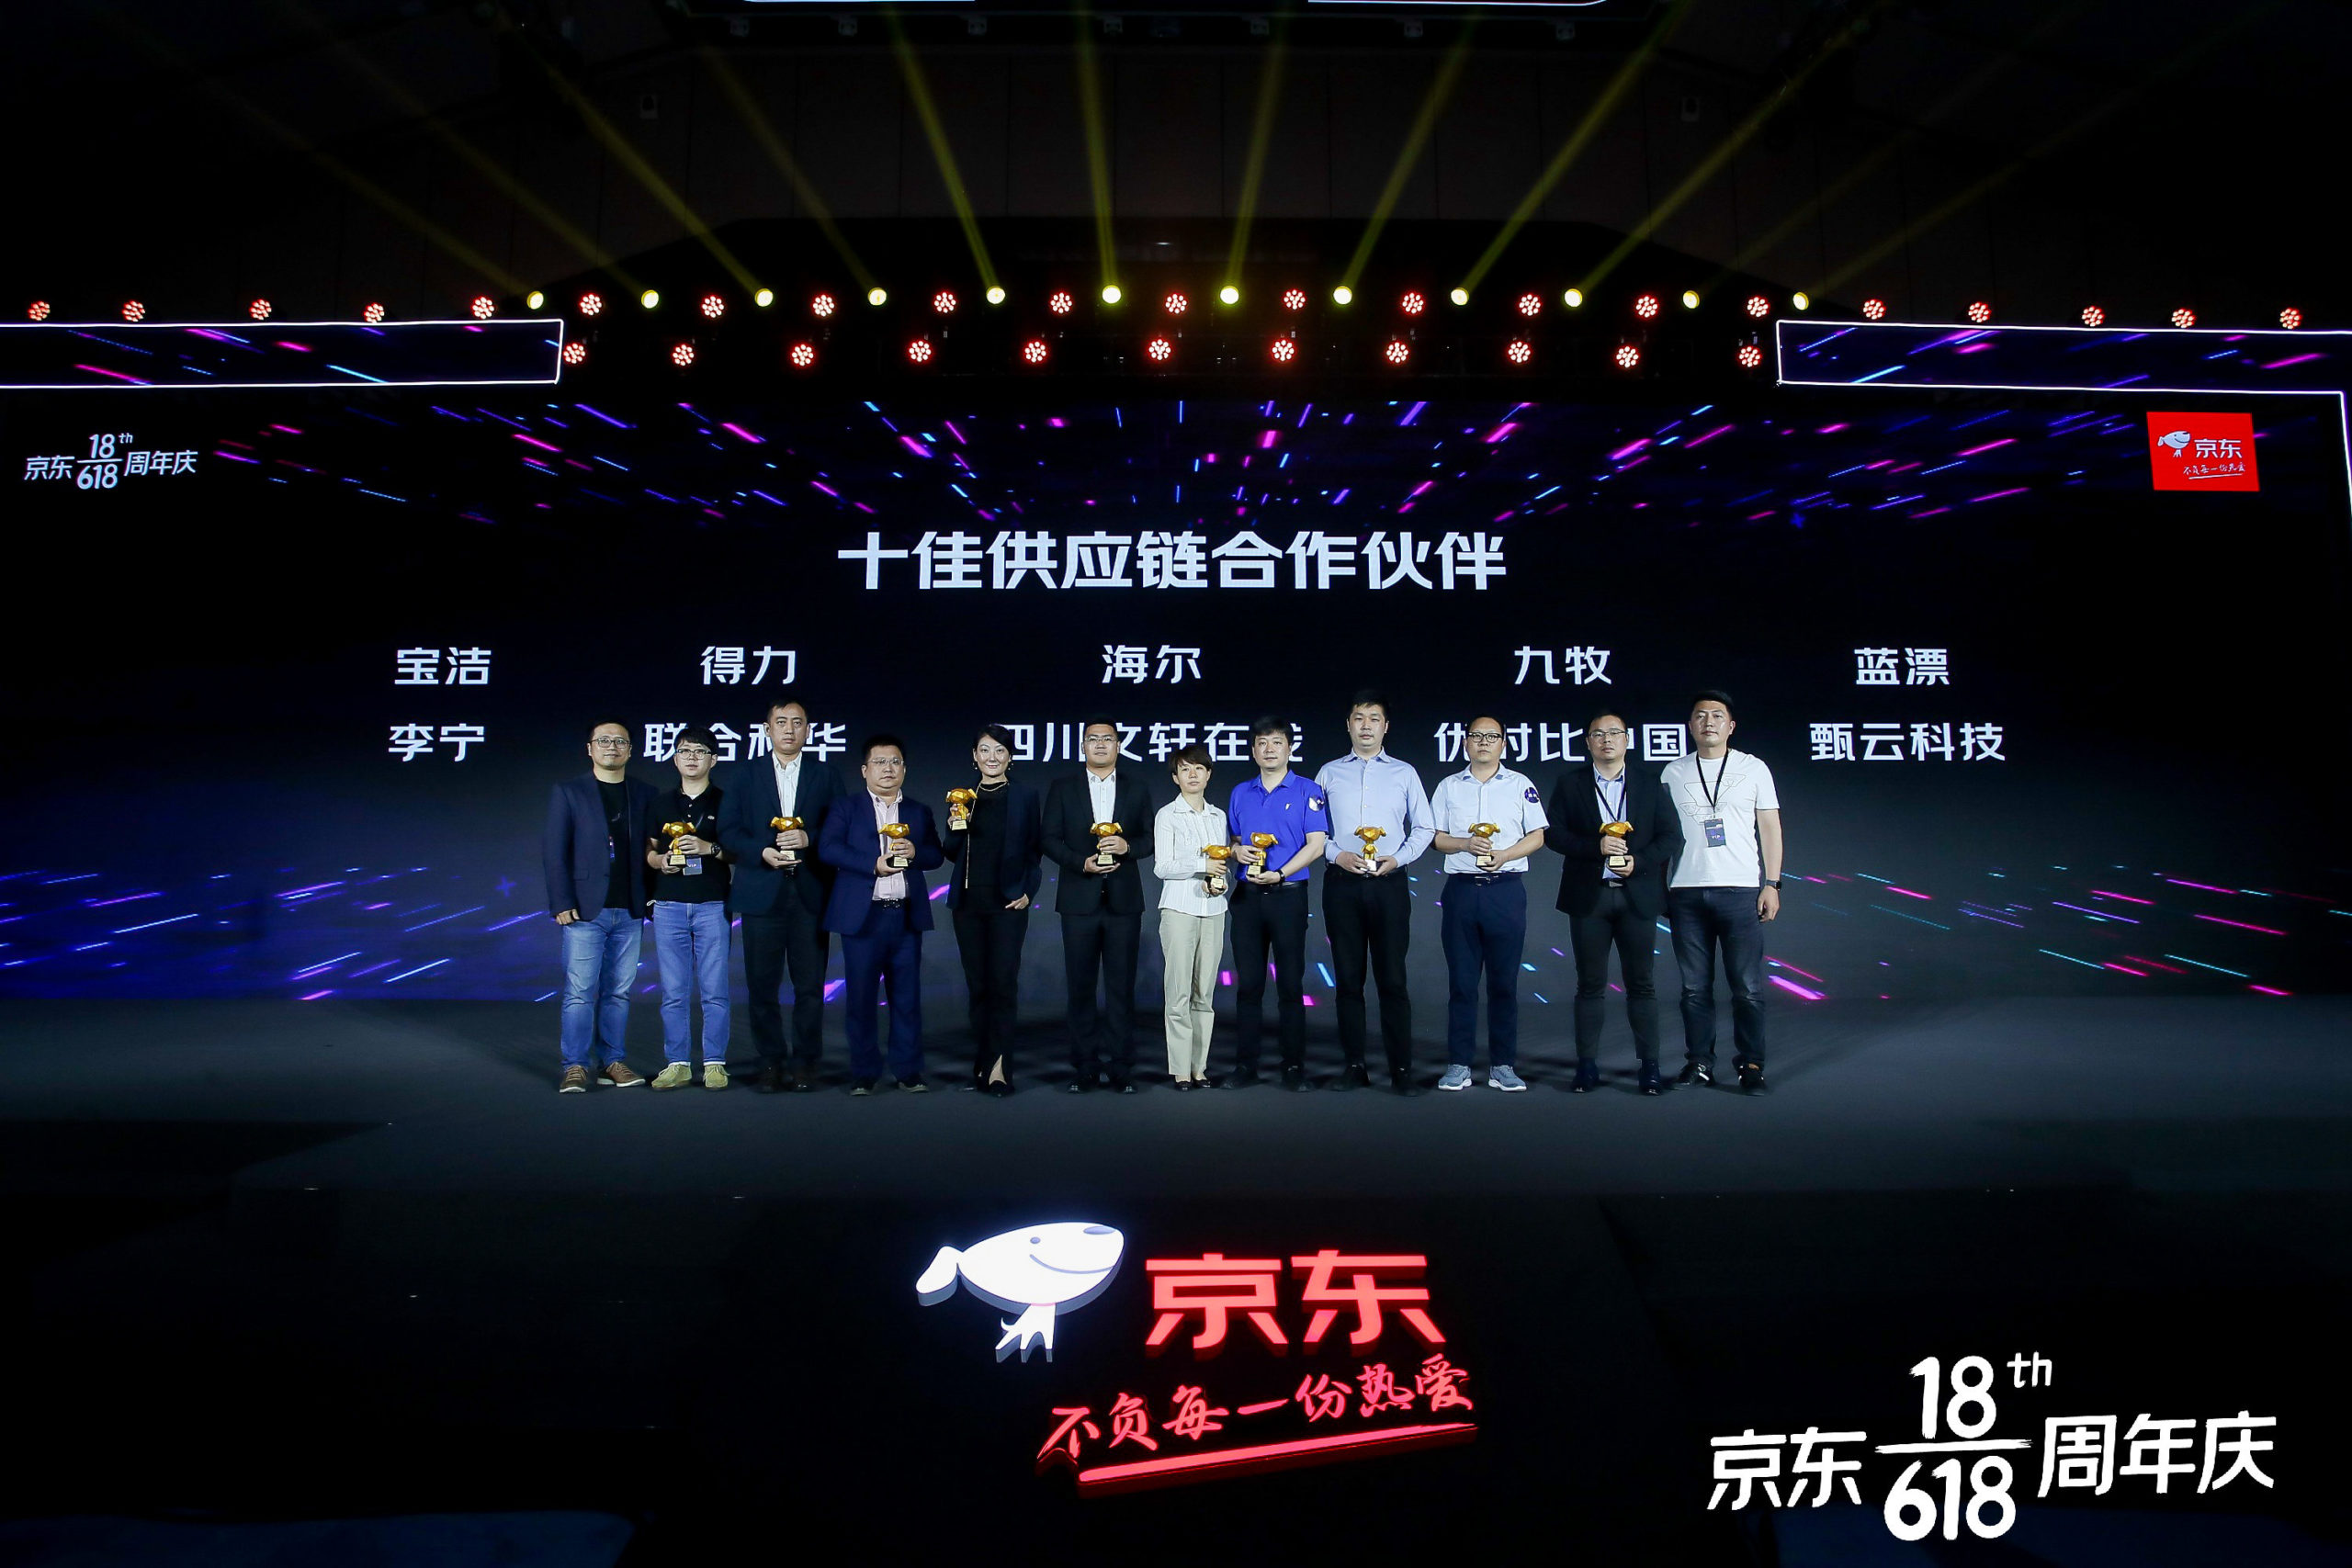 Representatives from P&G, Unilever, Li-Ning, Haier, Deli, JOMOO, Lam pure, winxuan.com, UCB China, and Zhenyun Technology receiving awards